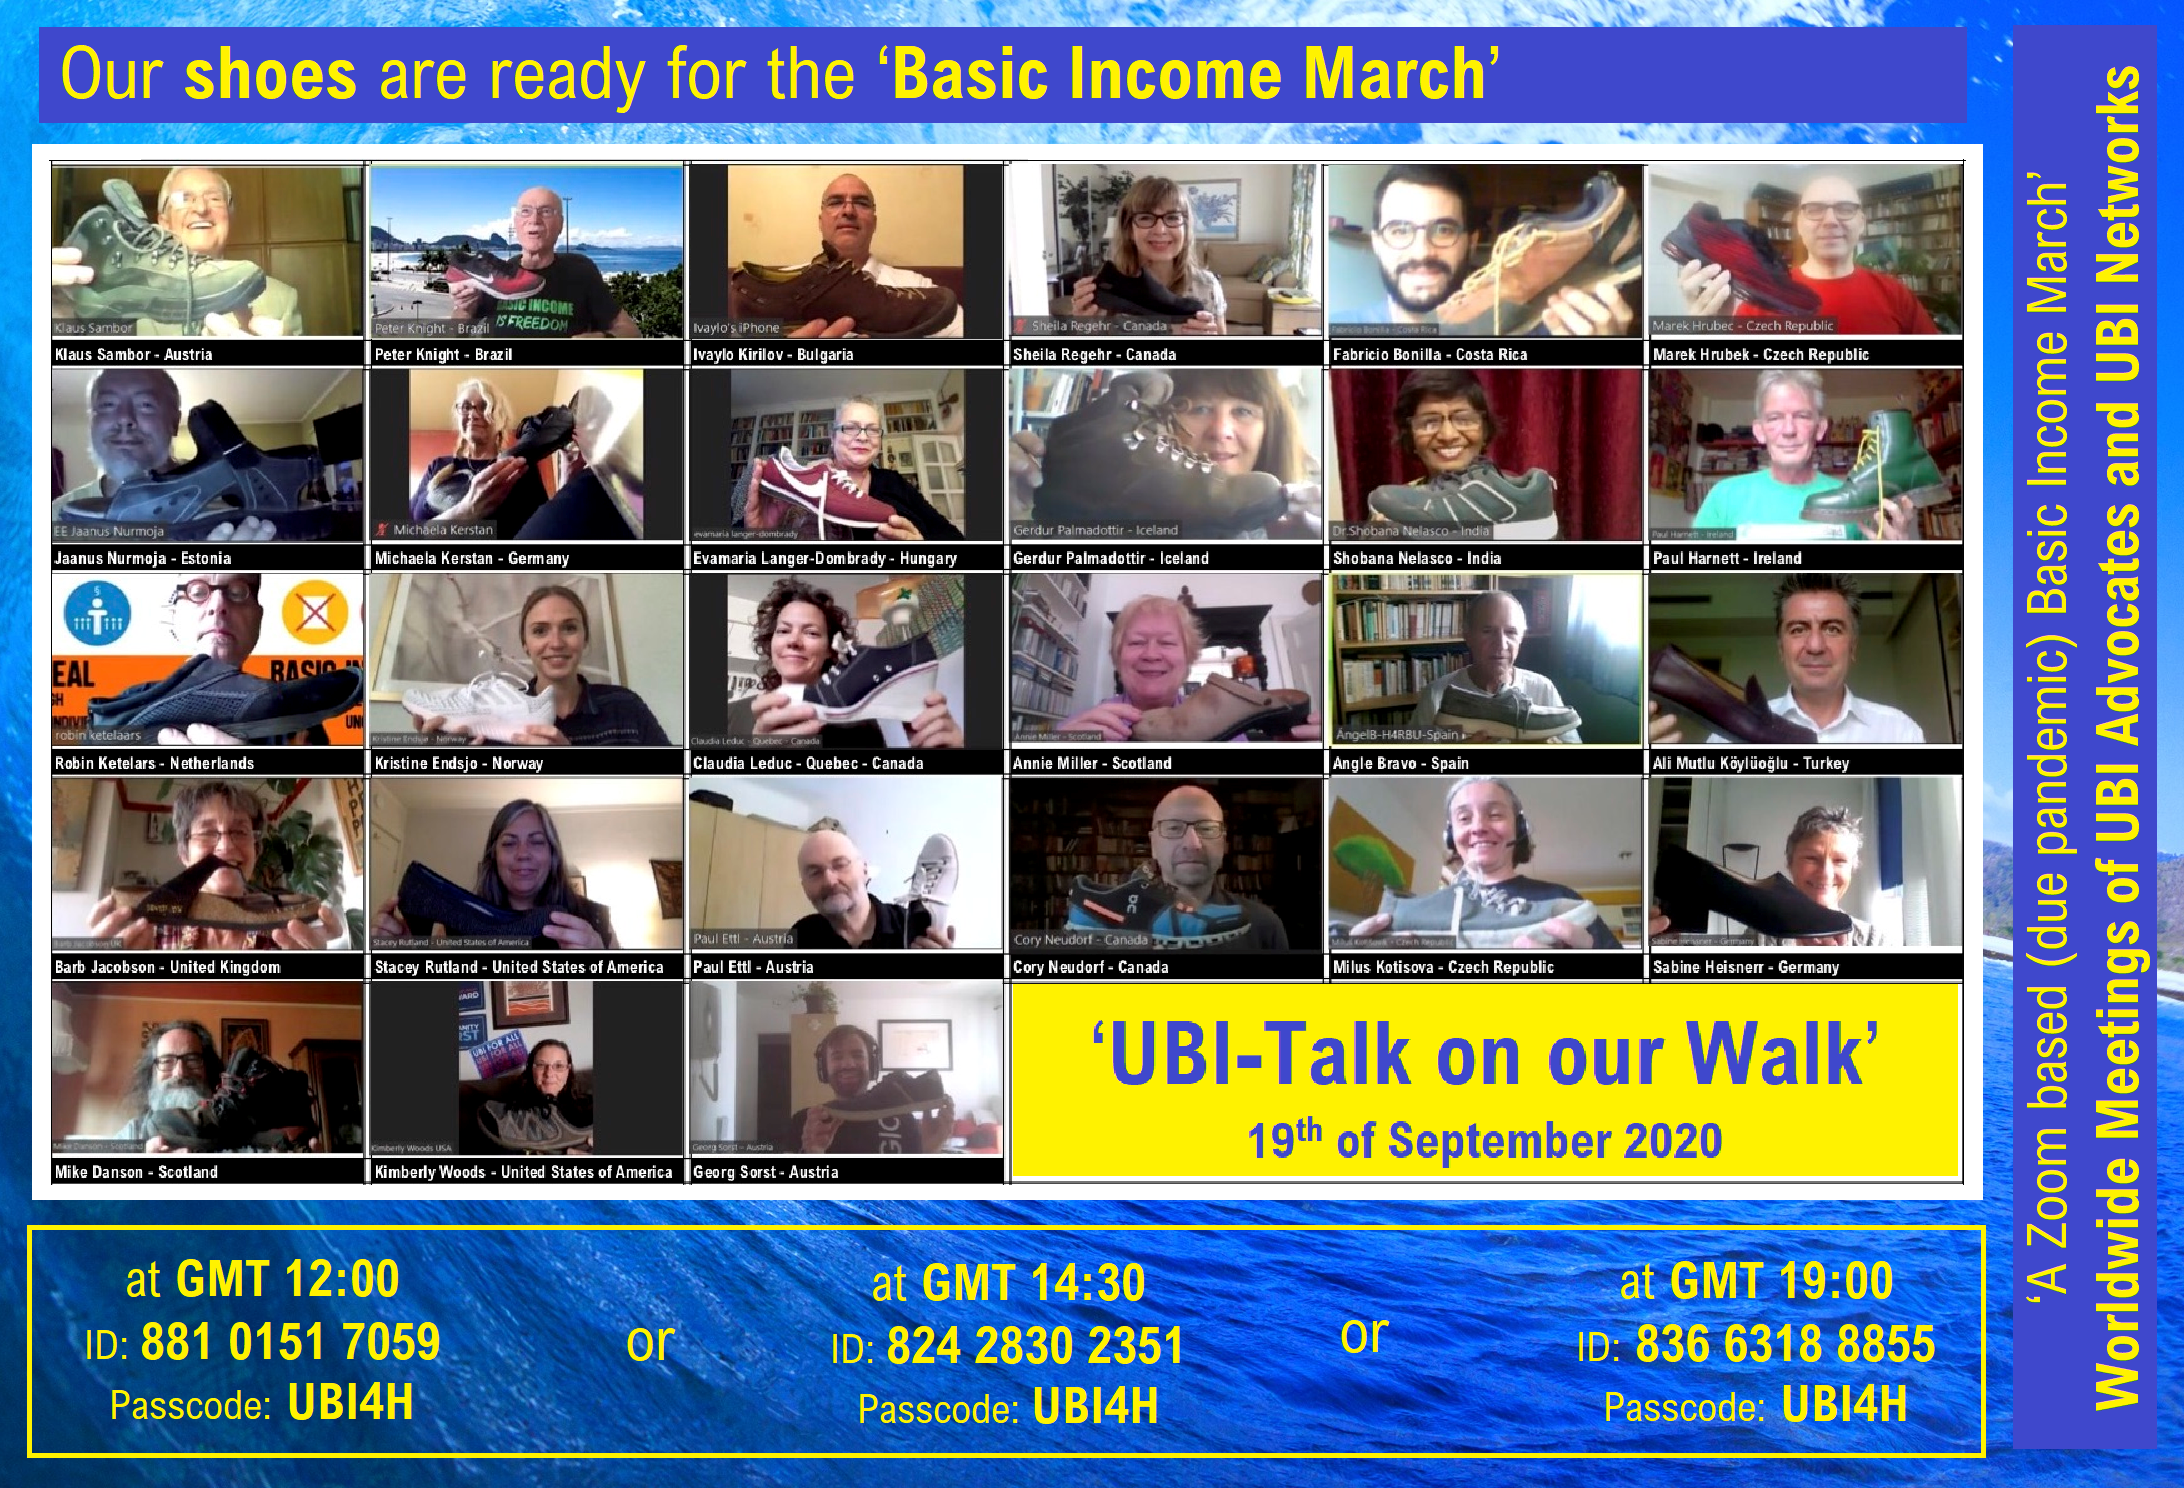 UBI-Talk on our Walk